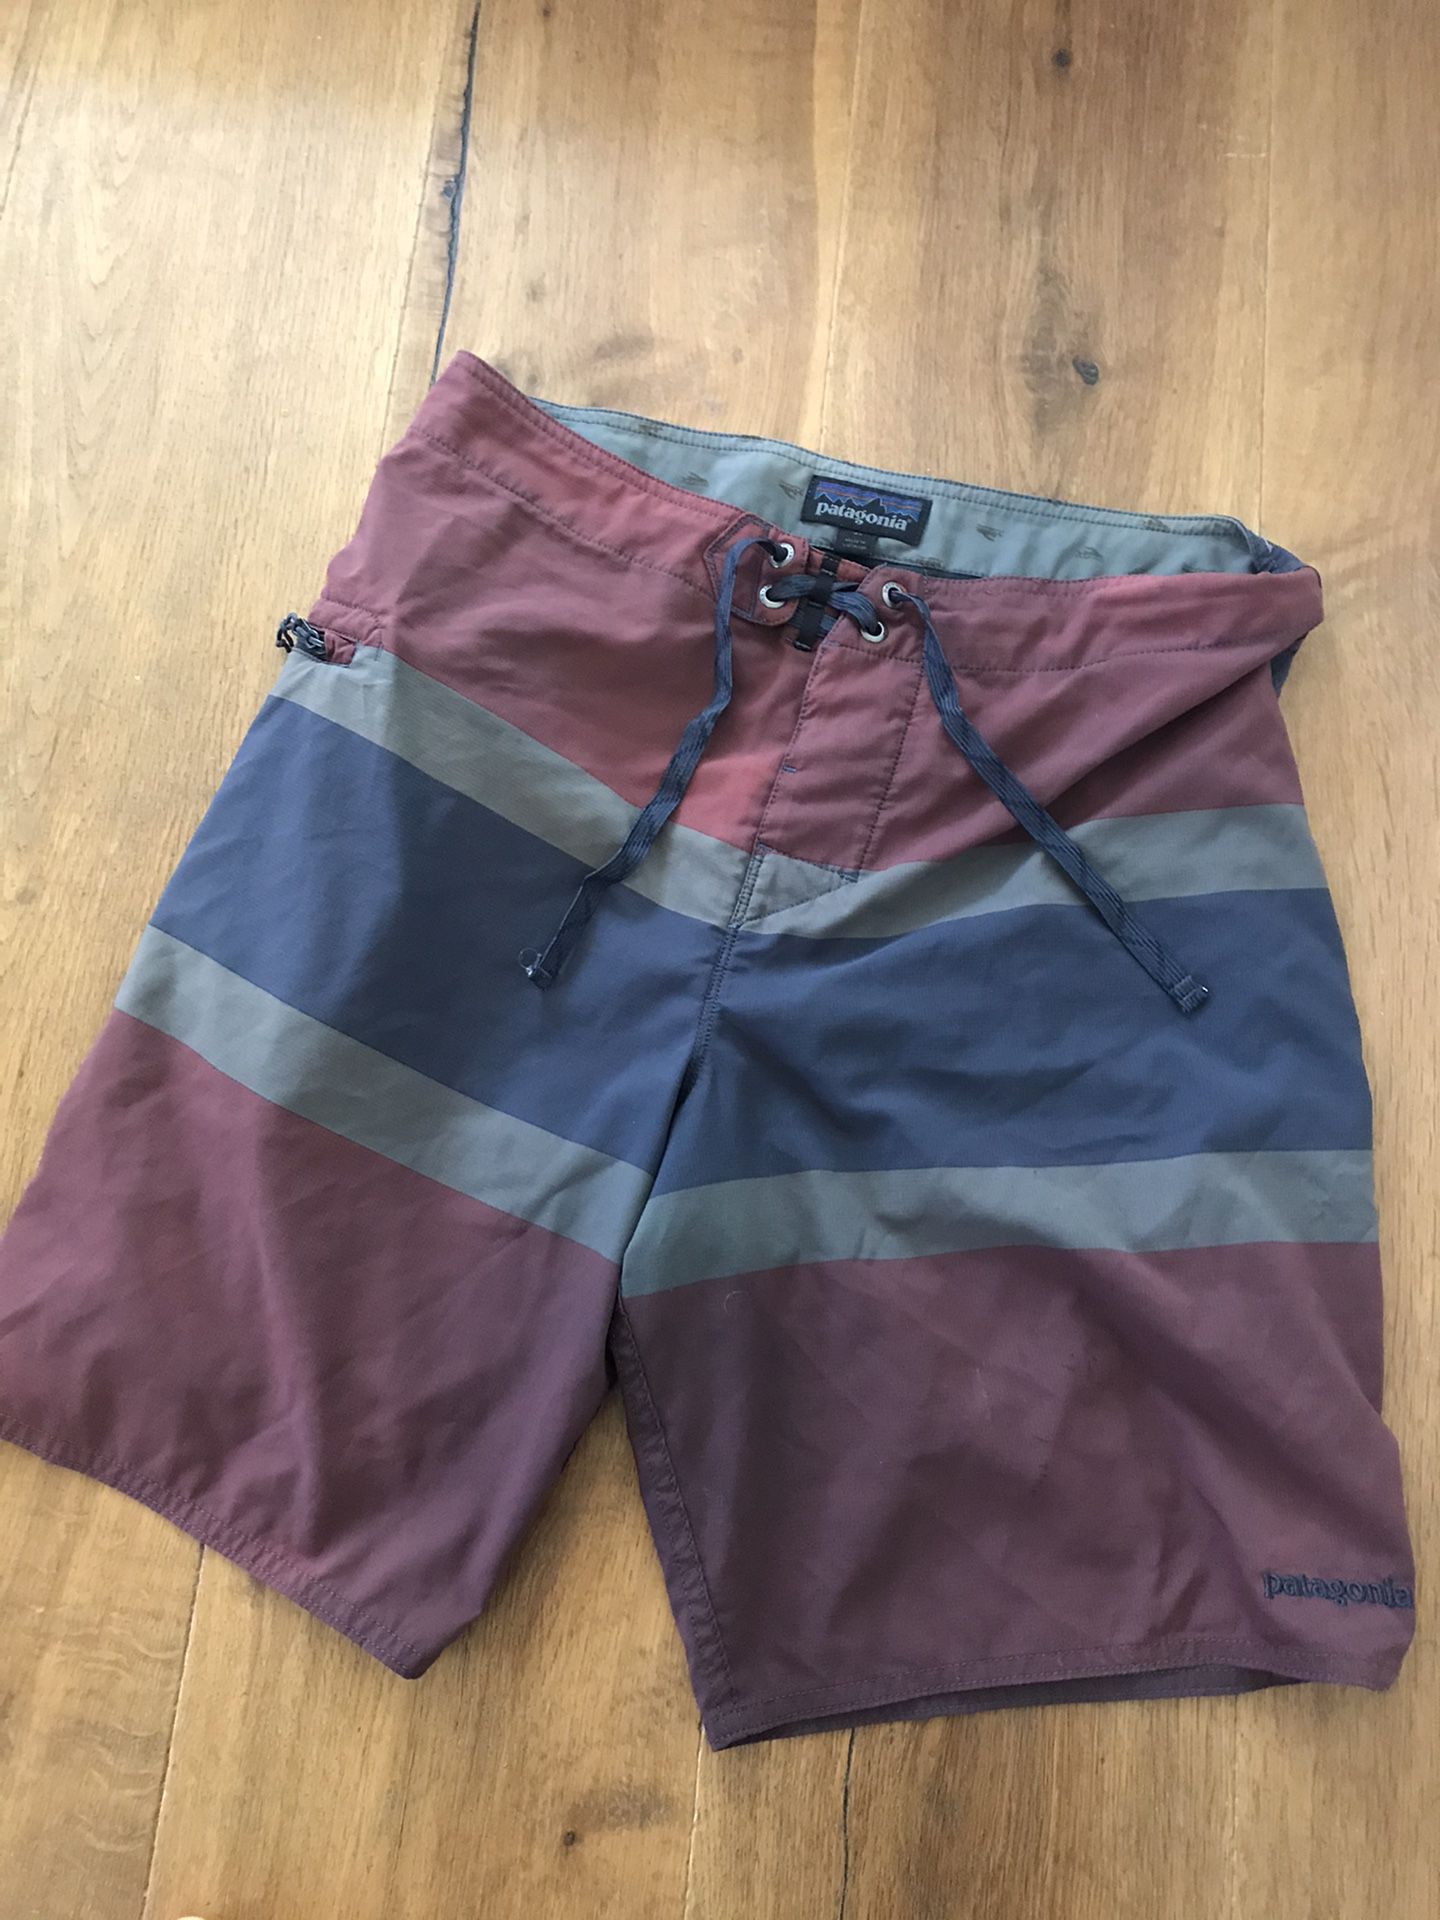 Patagonia board shorts size 31